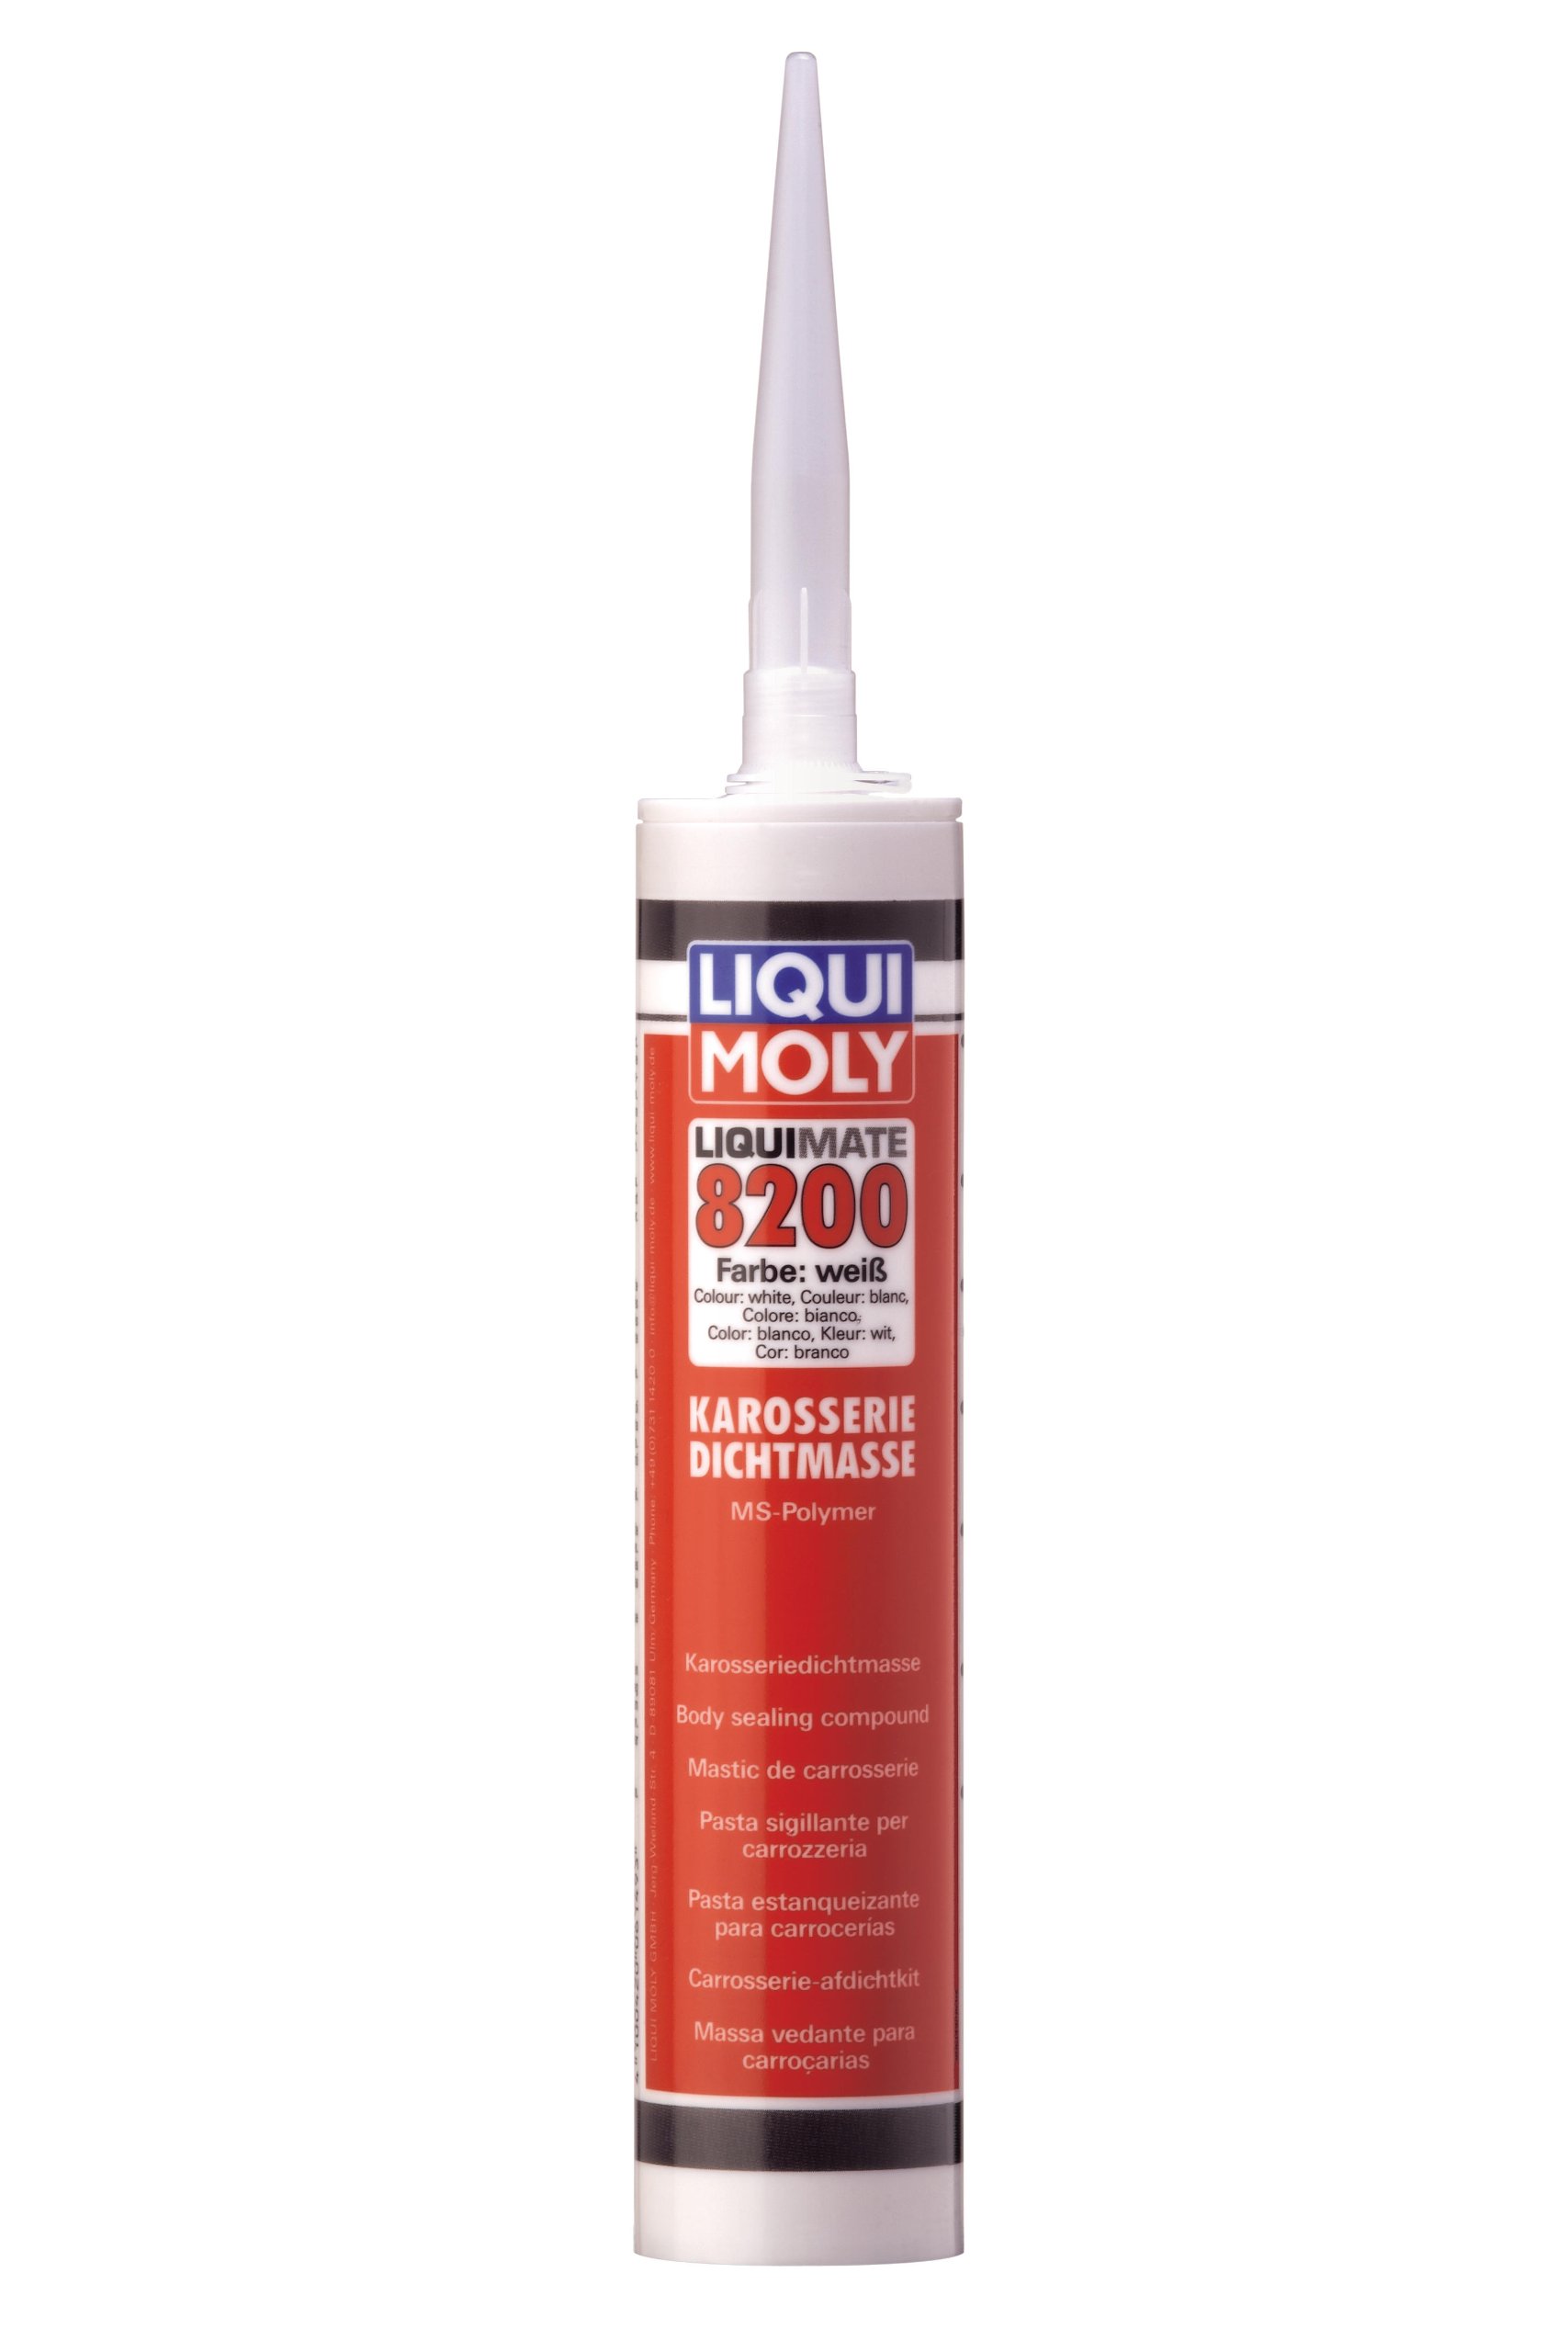 LIQUI MOLY Liquimate 8200 MS Polymer weiss | 290 ml | Karosserieschutz | Dichtstoff | Unterbodenschutz | Art.-Nr.: 6149 von Liqui Moly